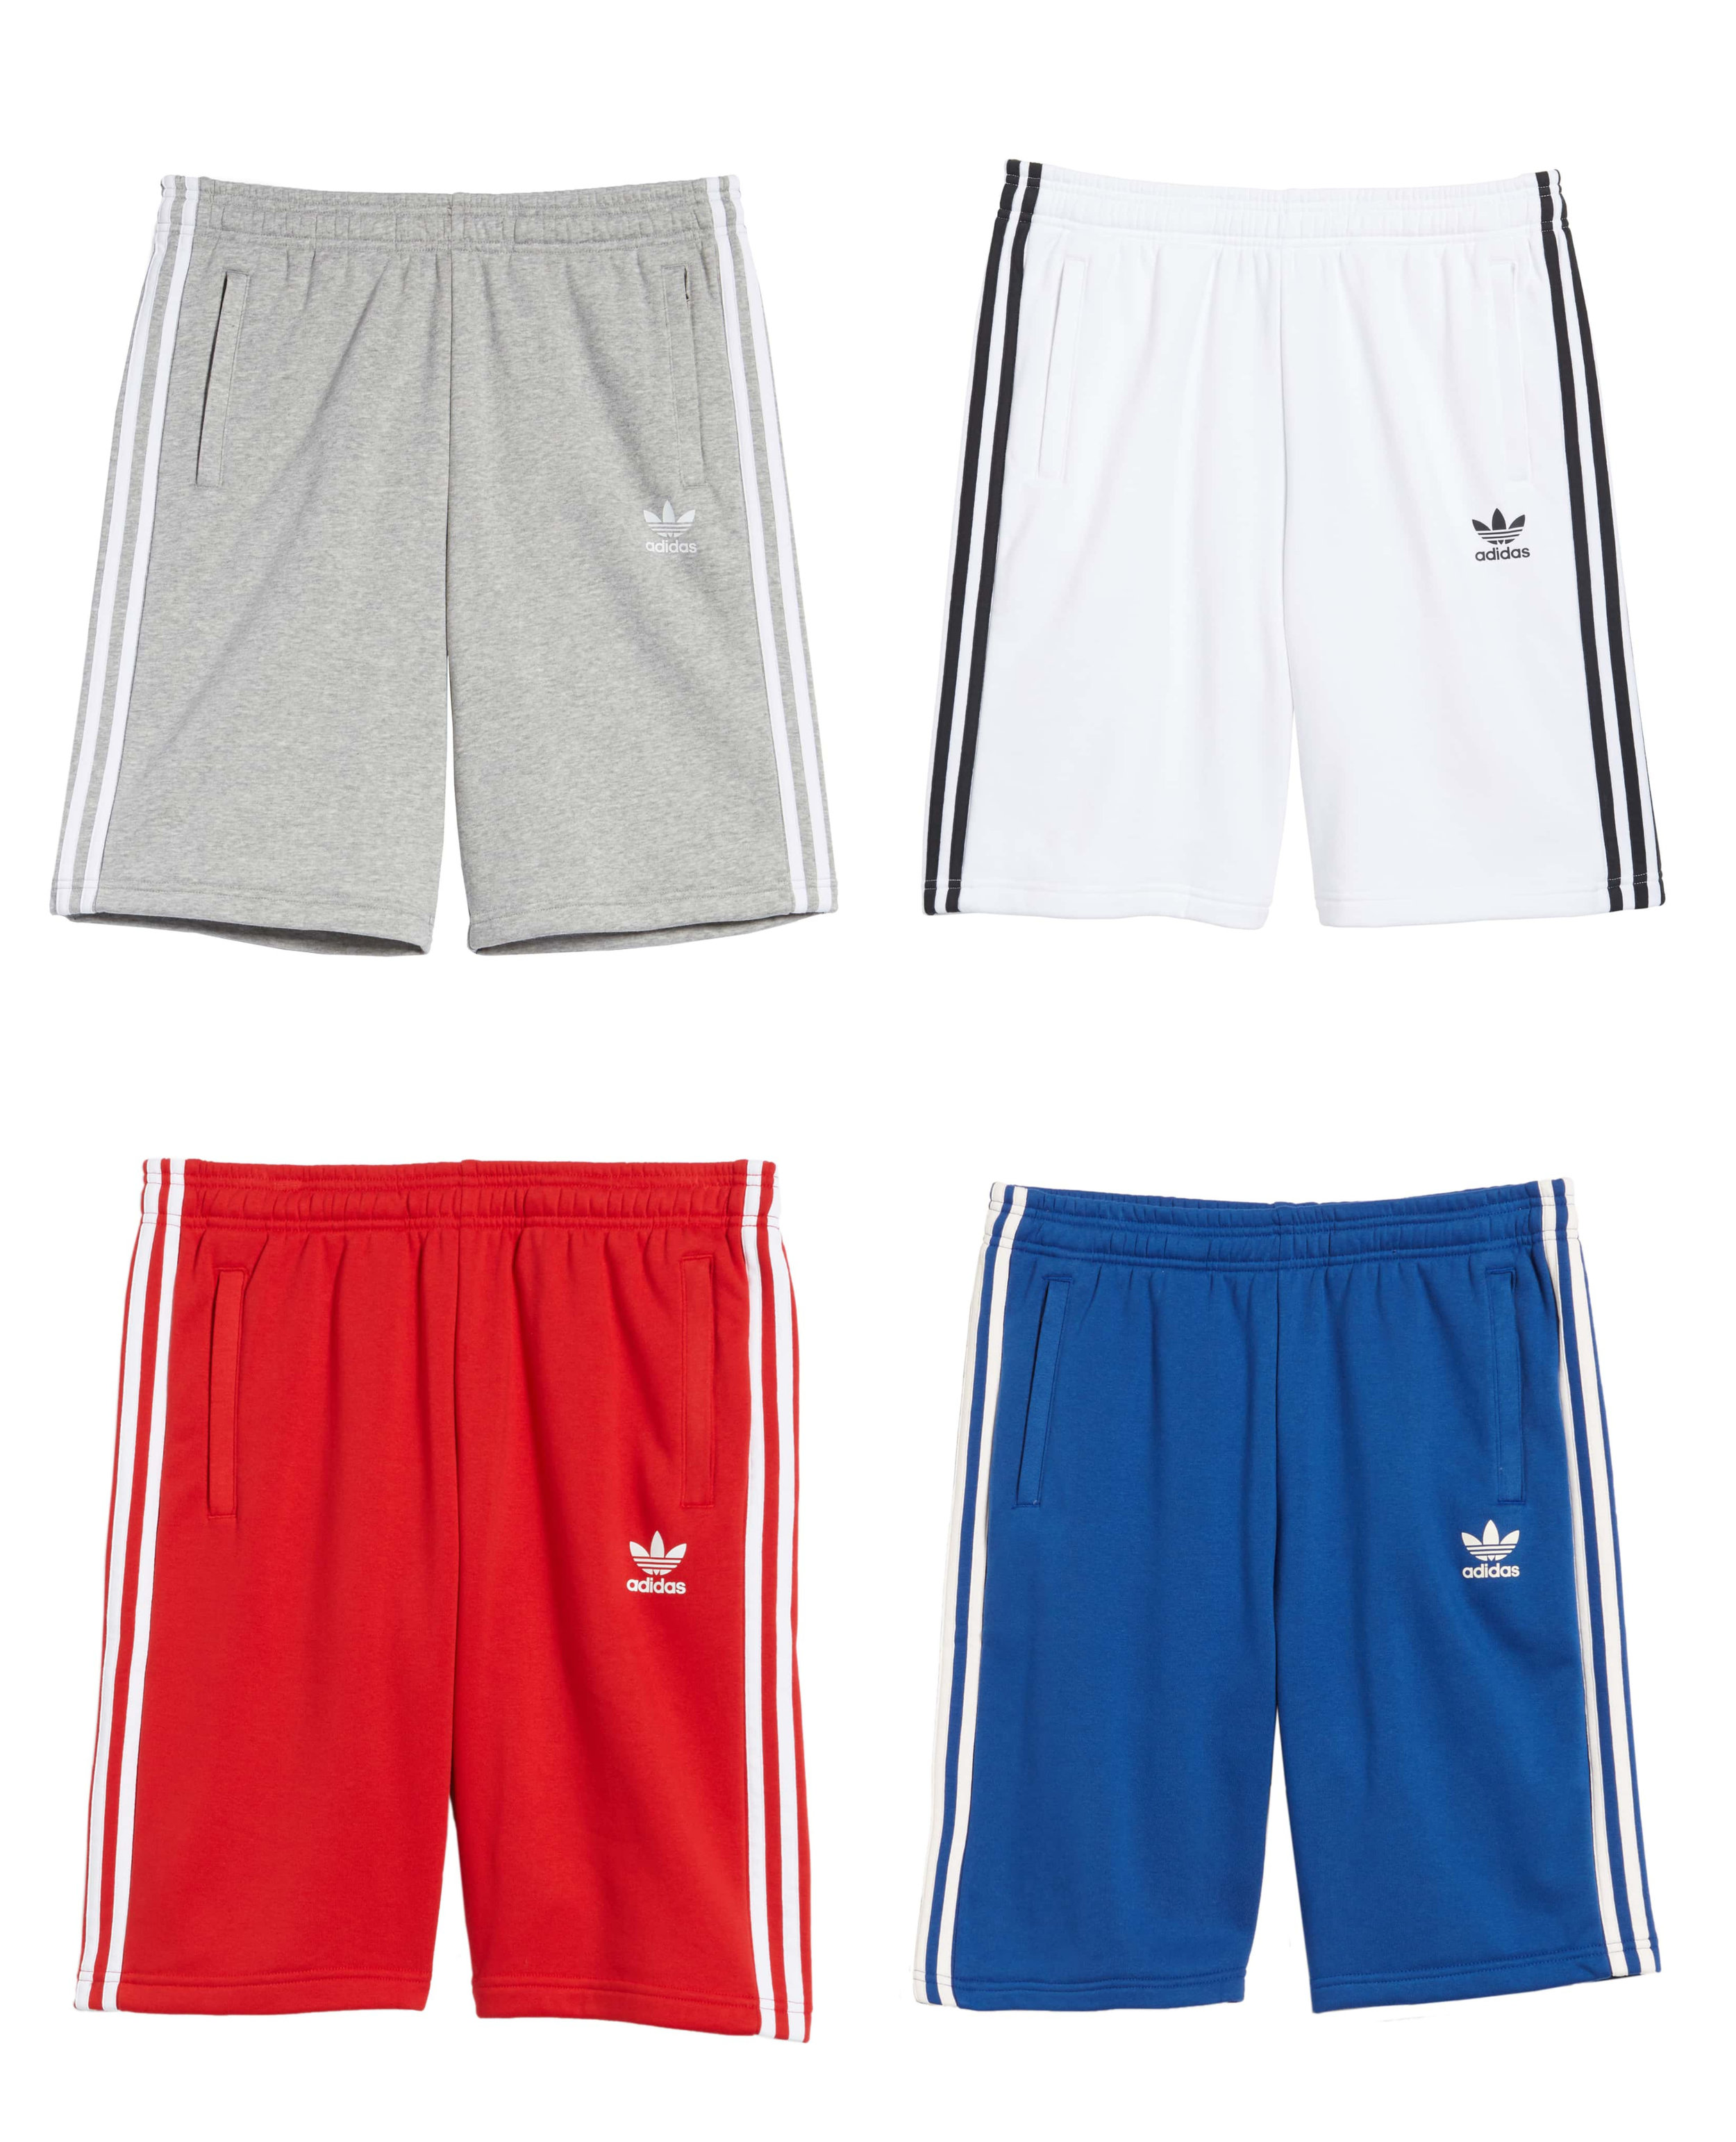 adidas 3 stripe fleece shorts